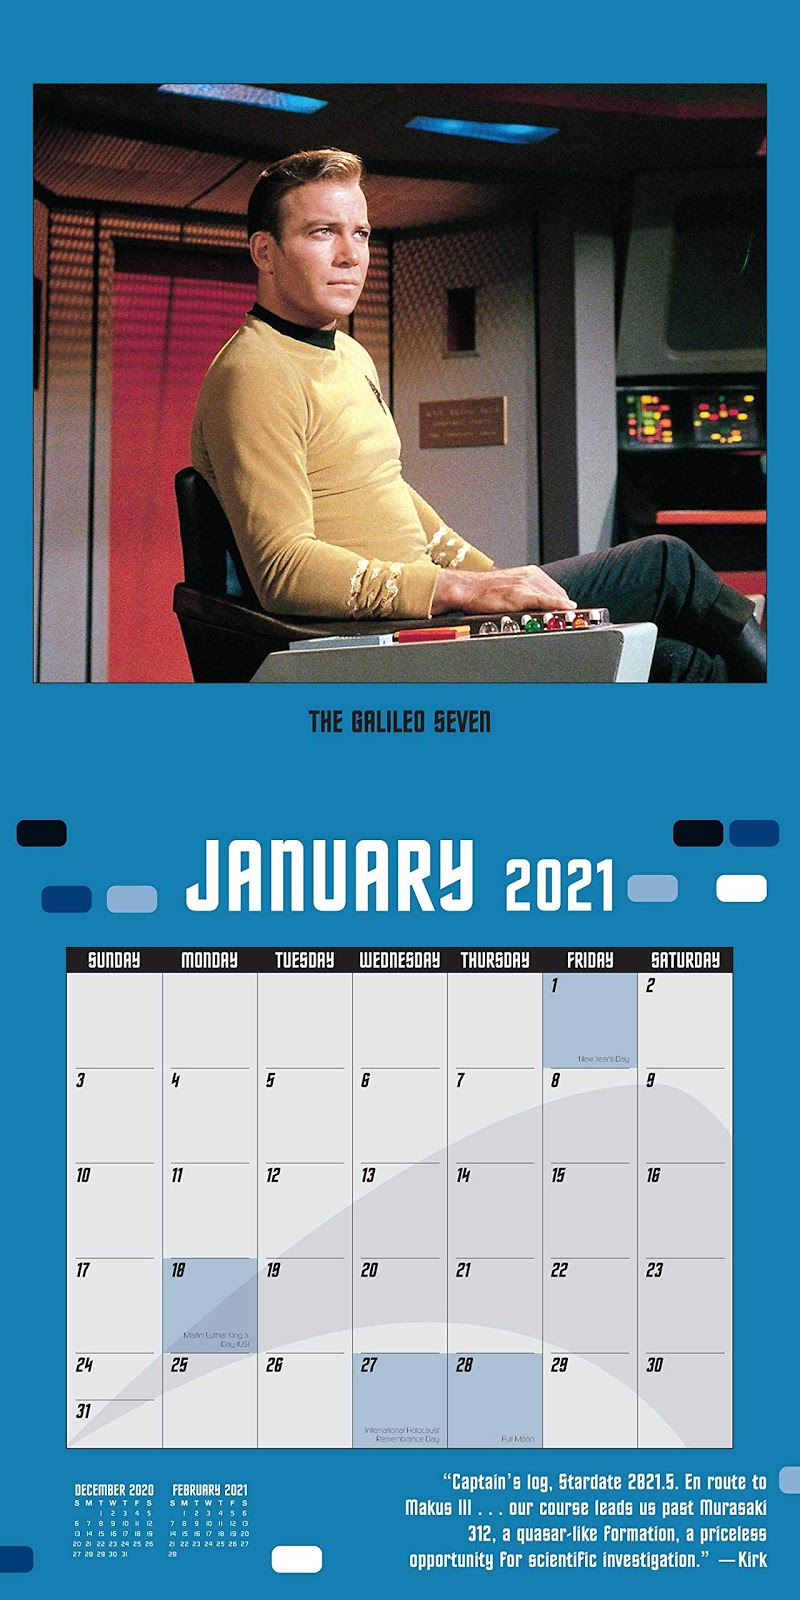 The Trek Collective 2021 Star Trek calendar previews